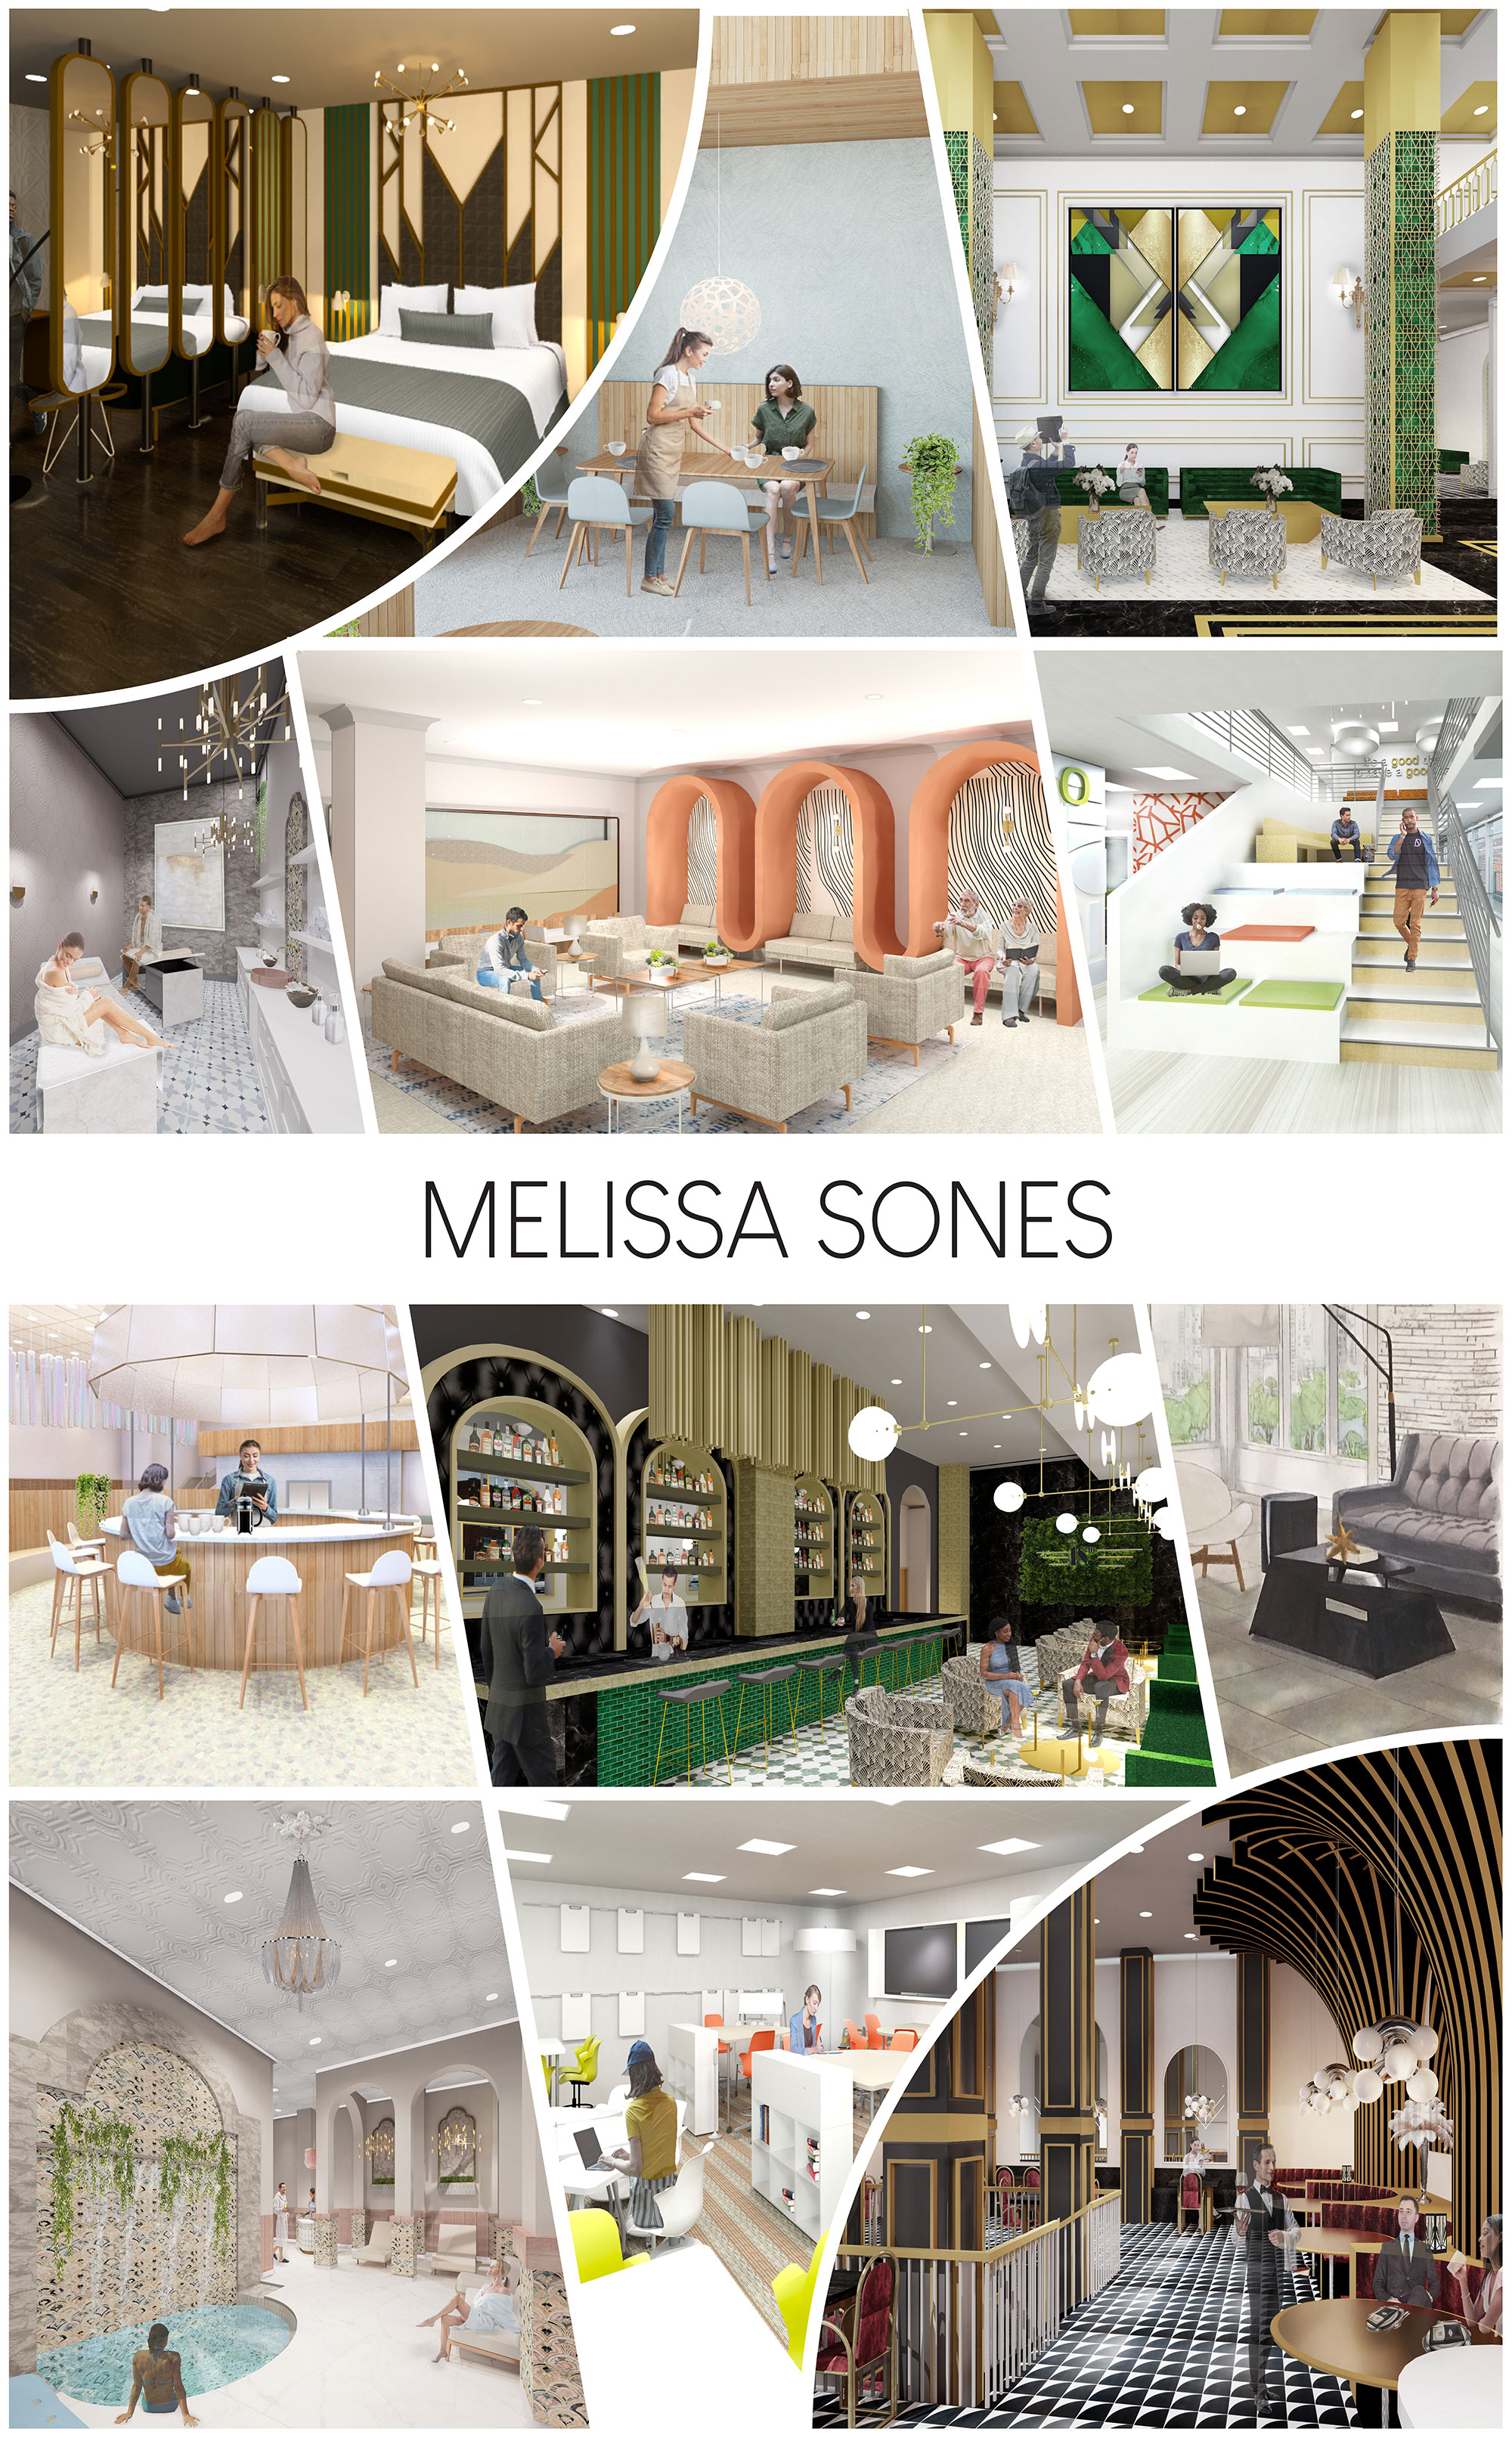 Melissa Sones's senior exhibit board